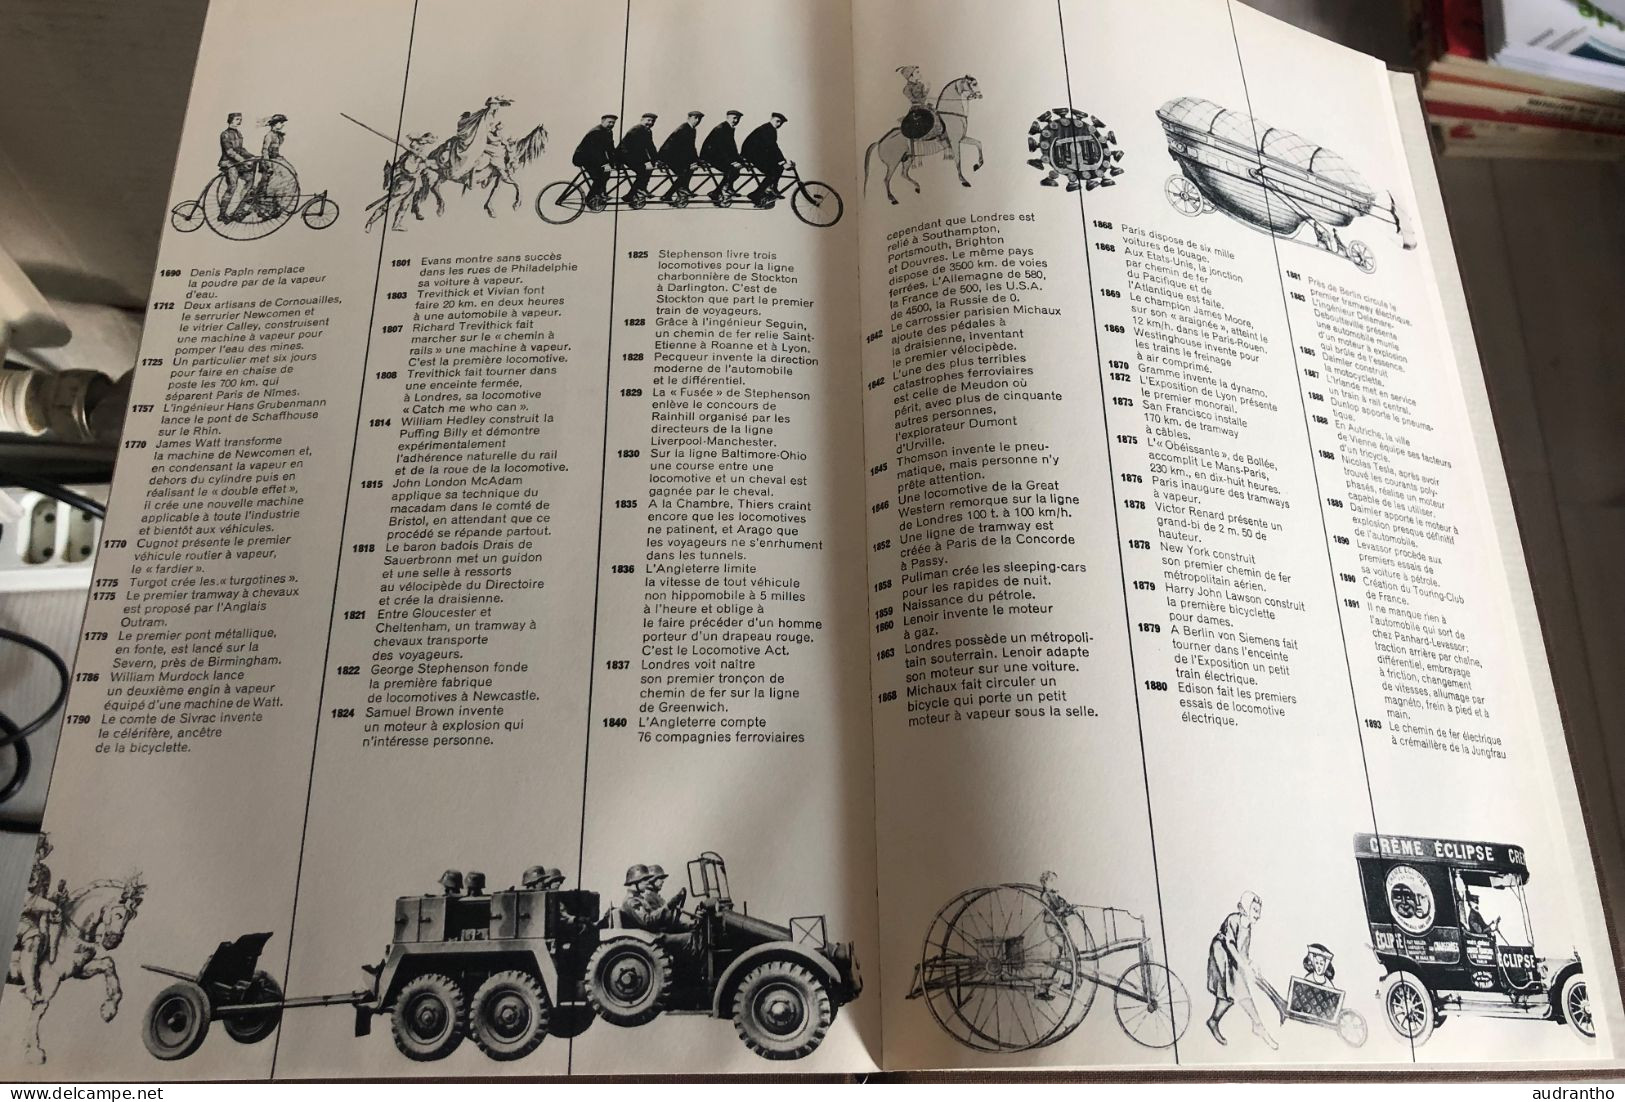 livre Histoire de la locomotive terrestre Maurice fabre 1964